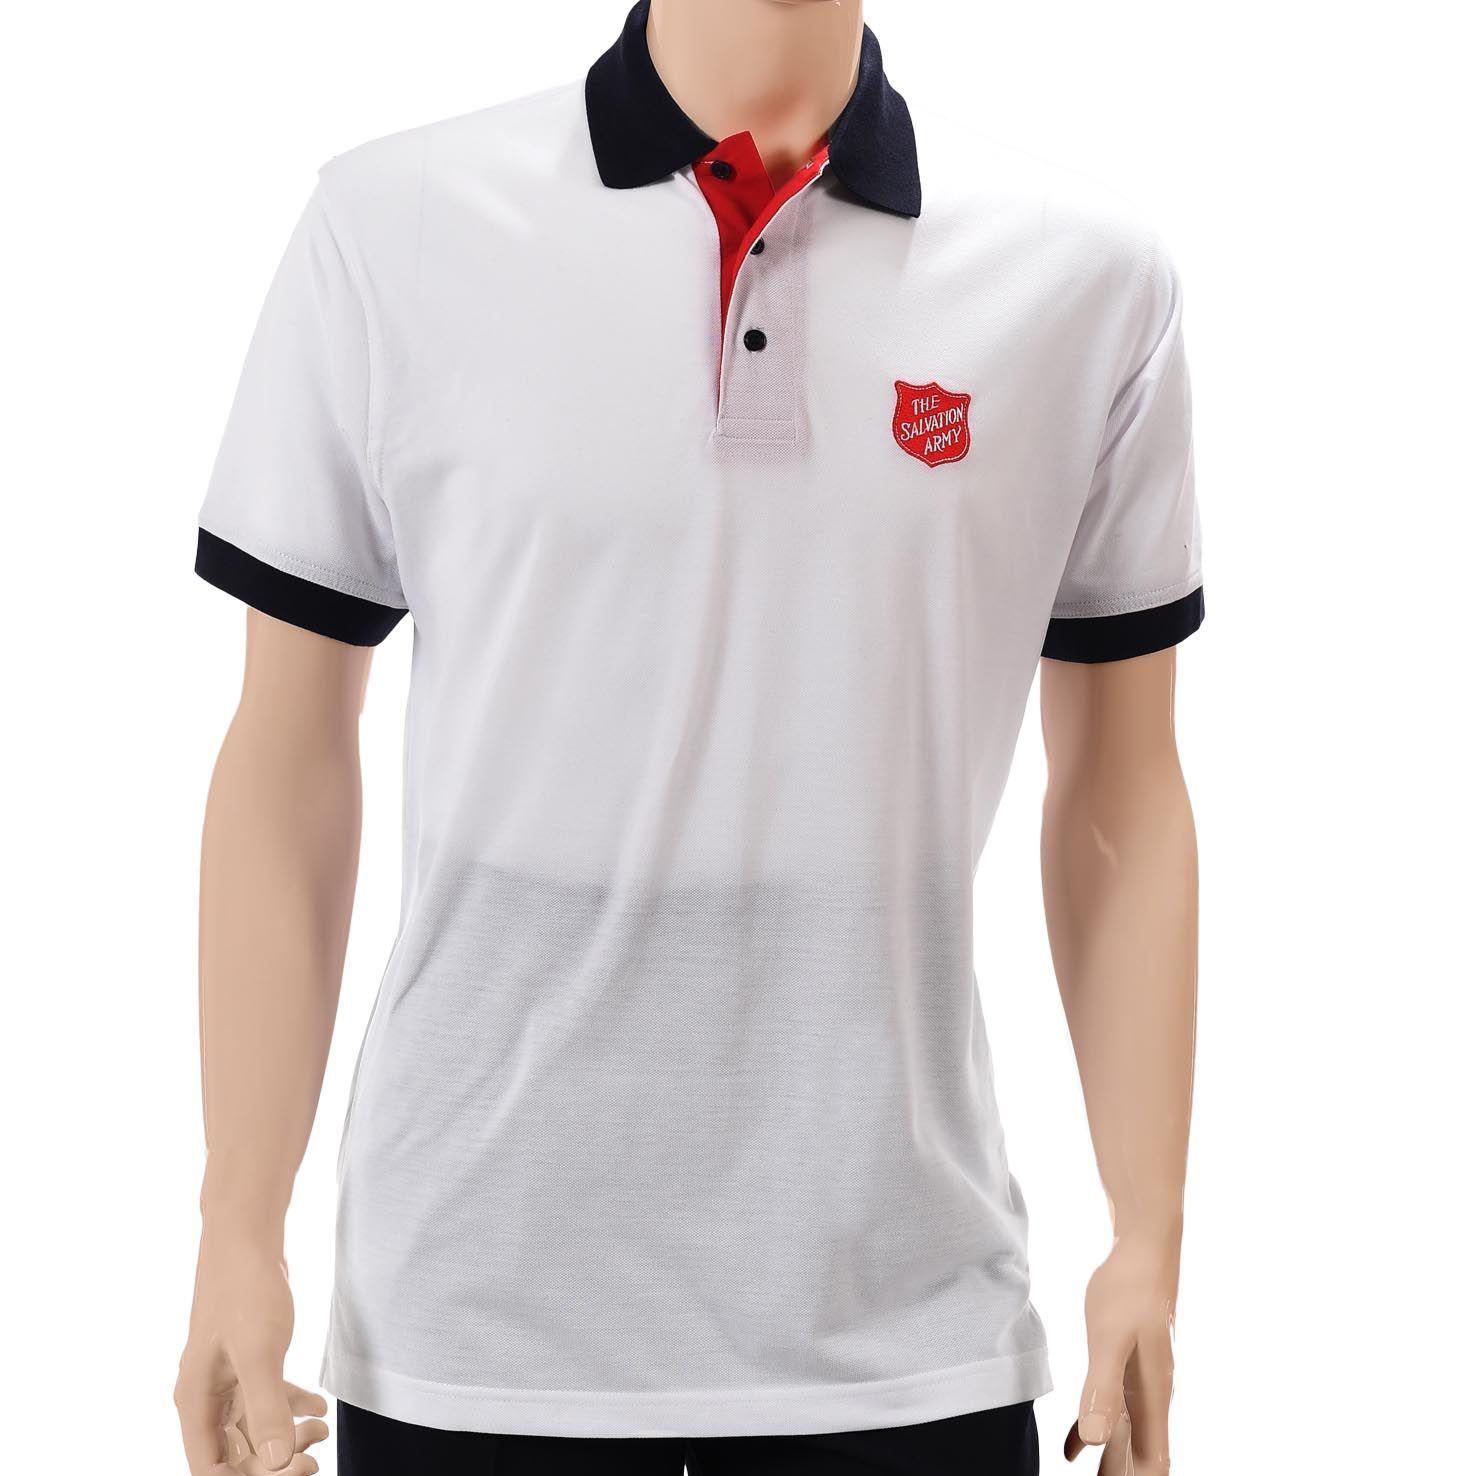 Polo Shirt Logo - Unisex Polo Shirt White Contrast with Red Shield Logo